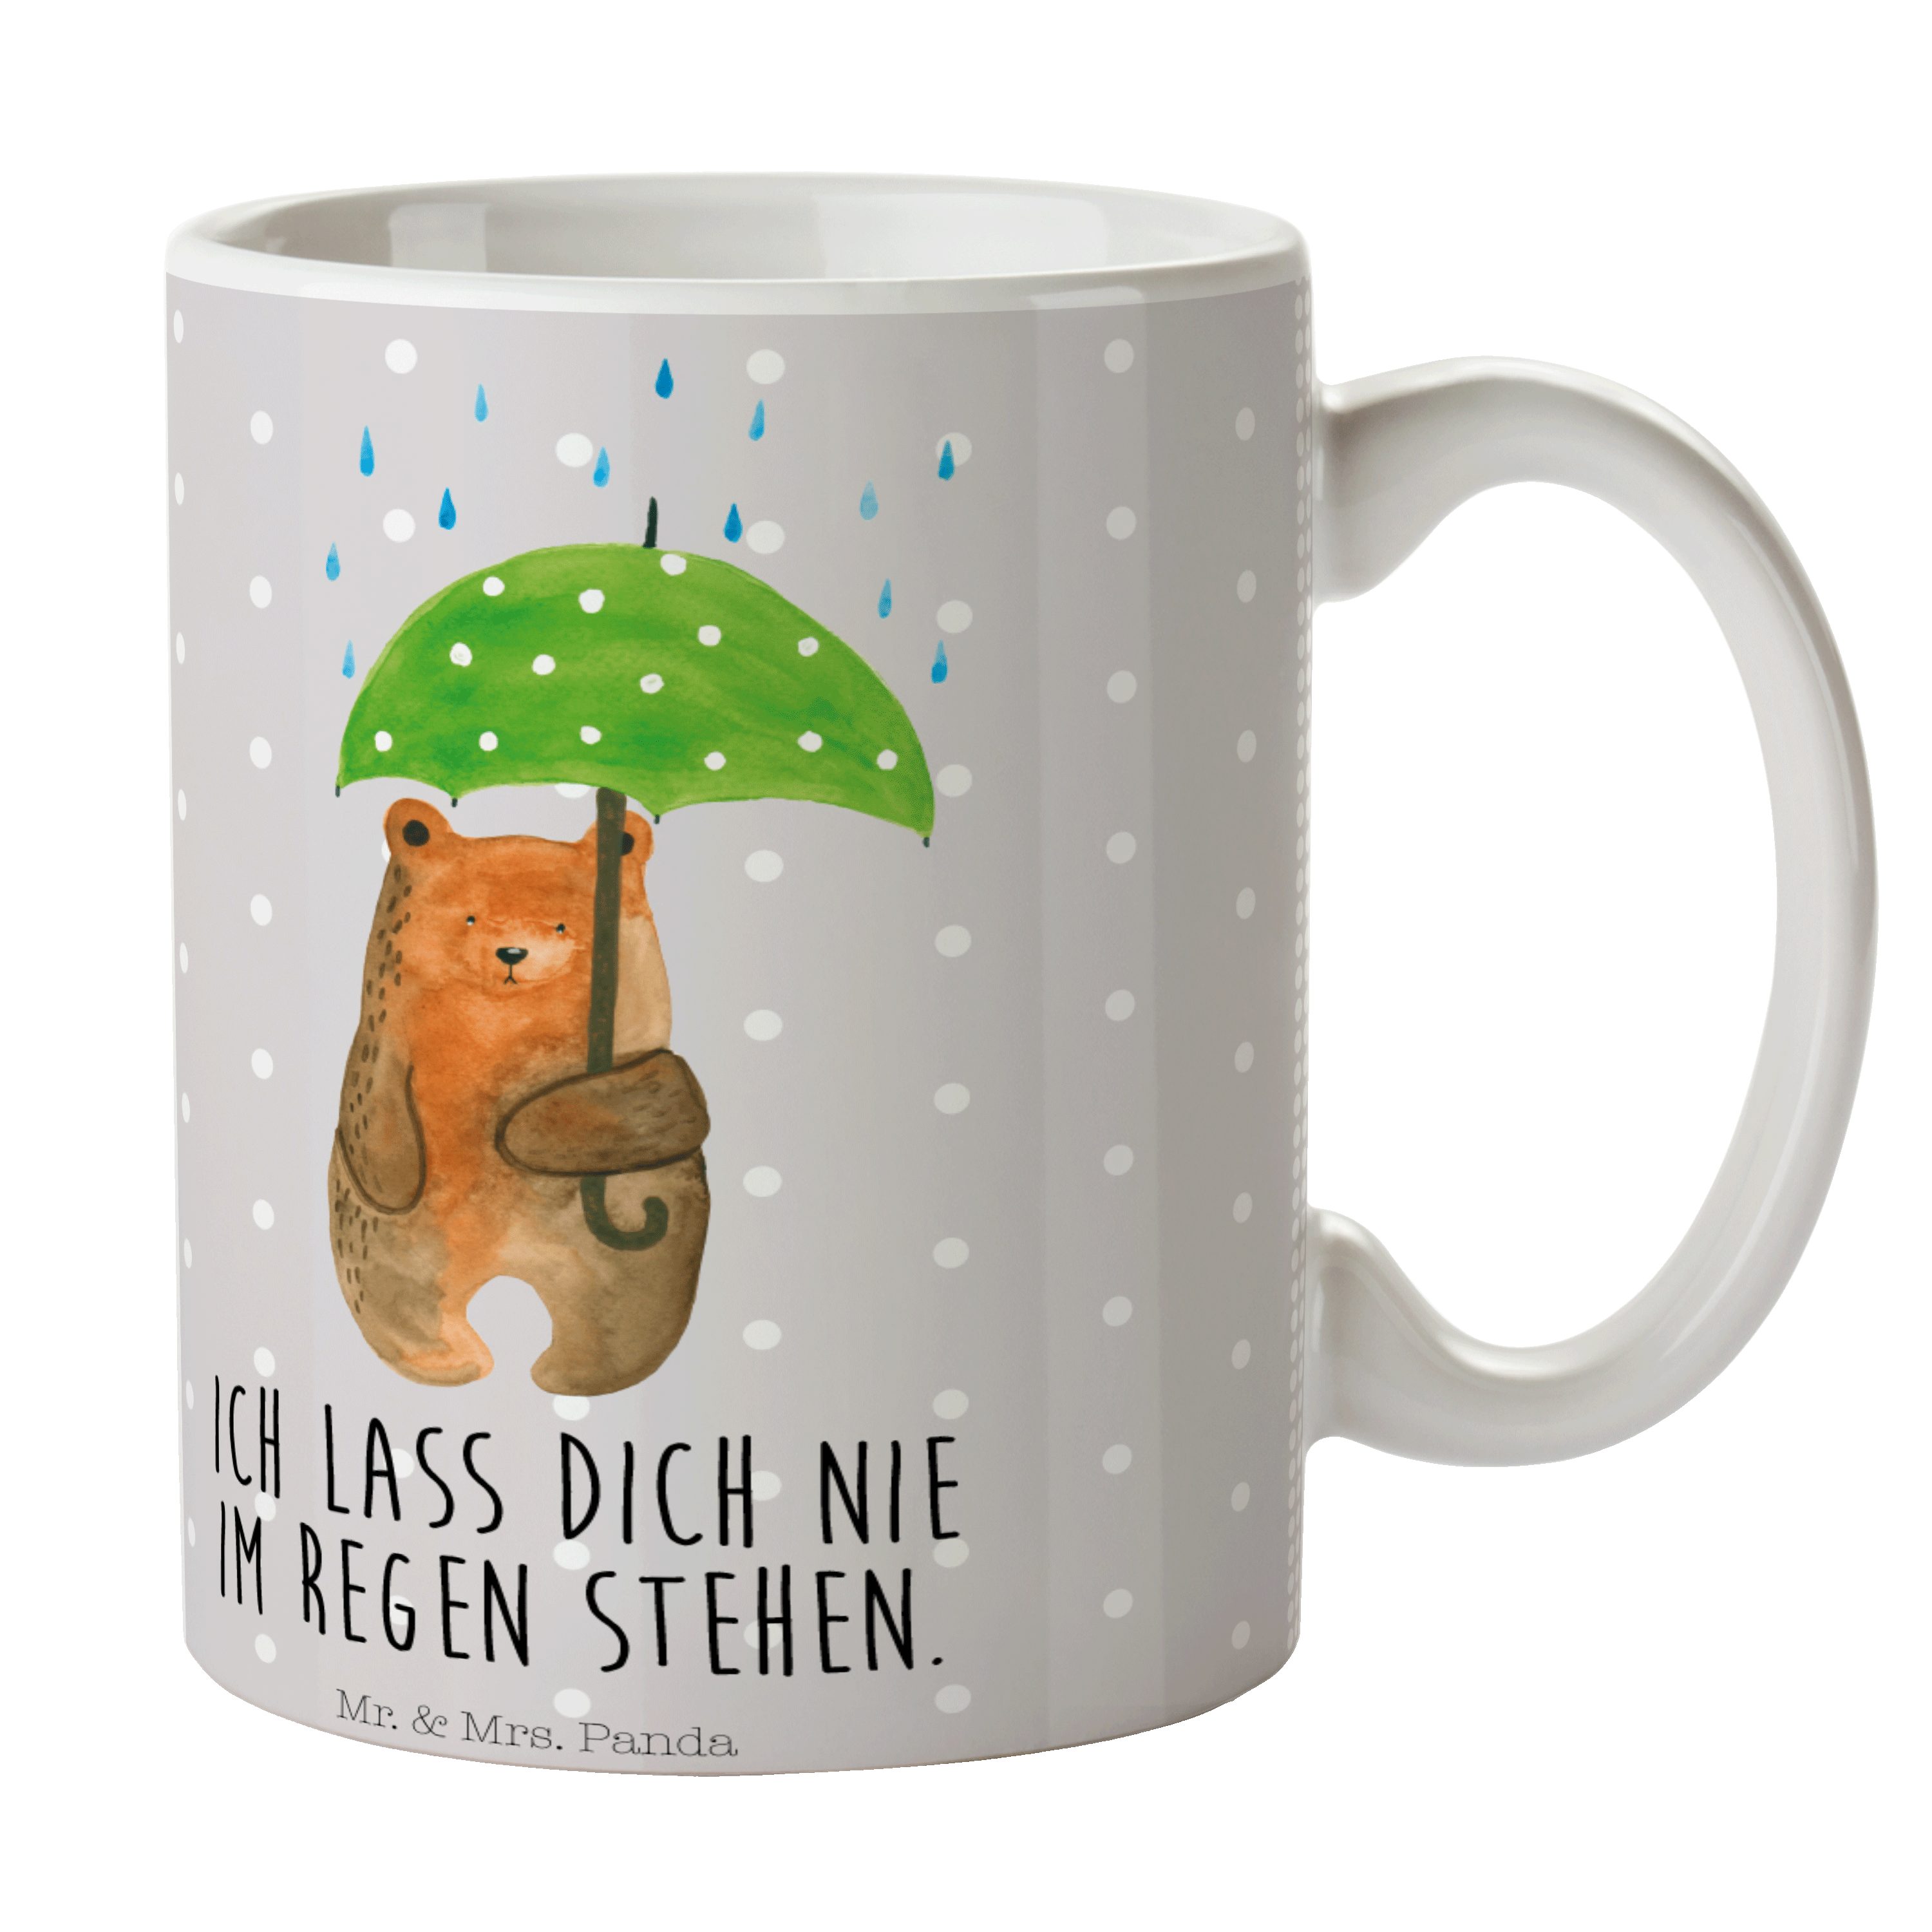 Mr. & Mrs. Panda Tasse Bär mit Regenschirm - Grau Pastell - Geschenk, Keramiktasse, Partner, Keramik